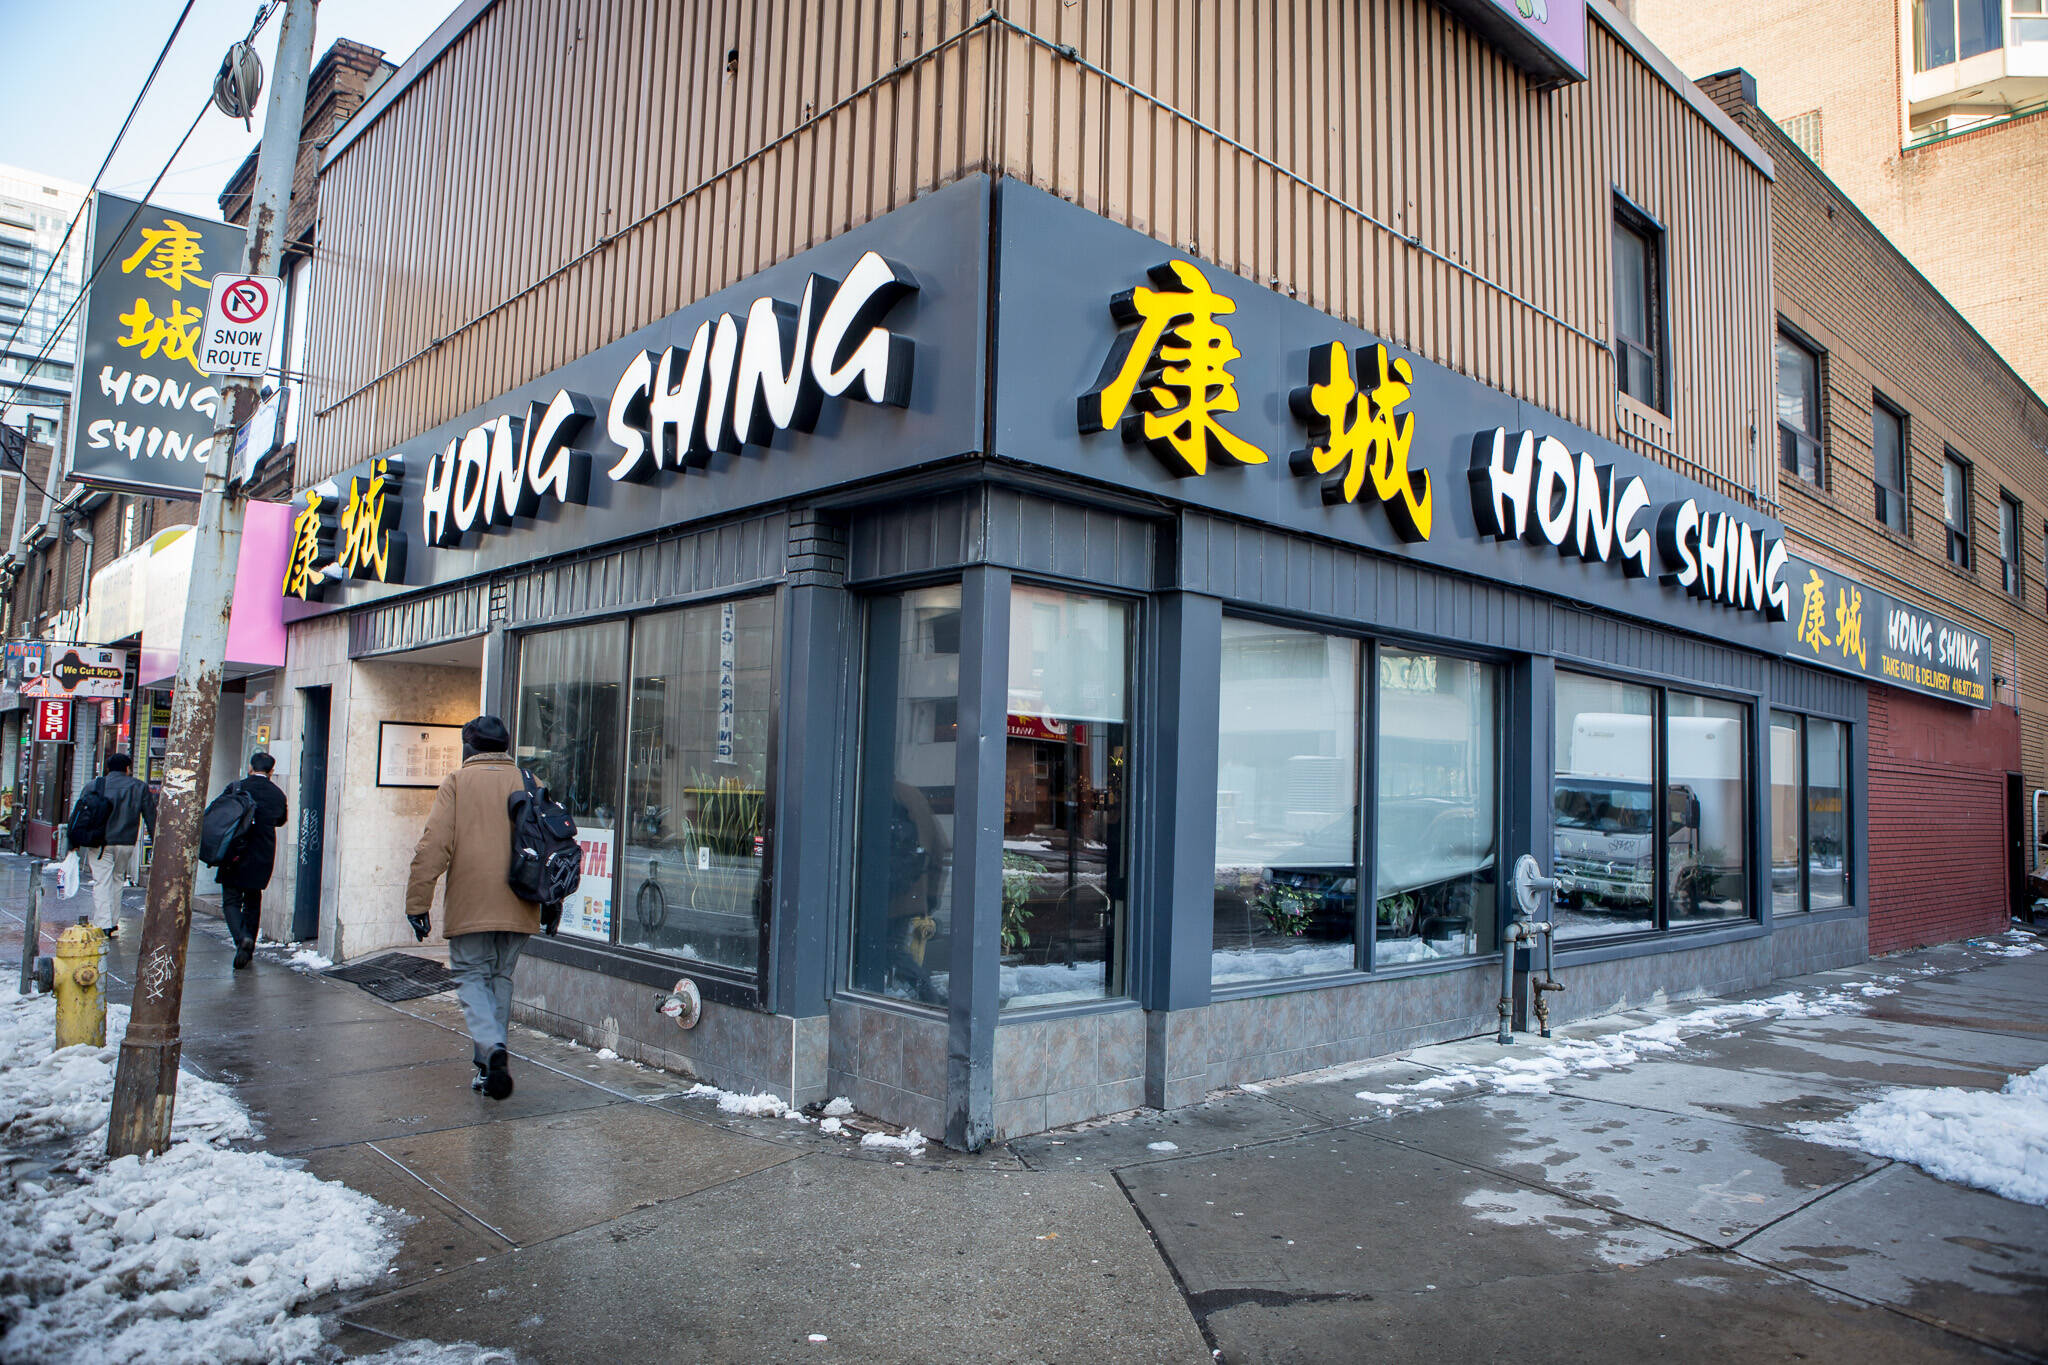 hong shing restaurant